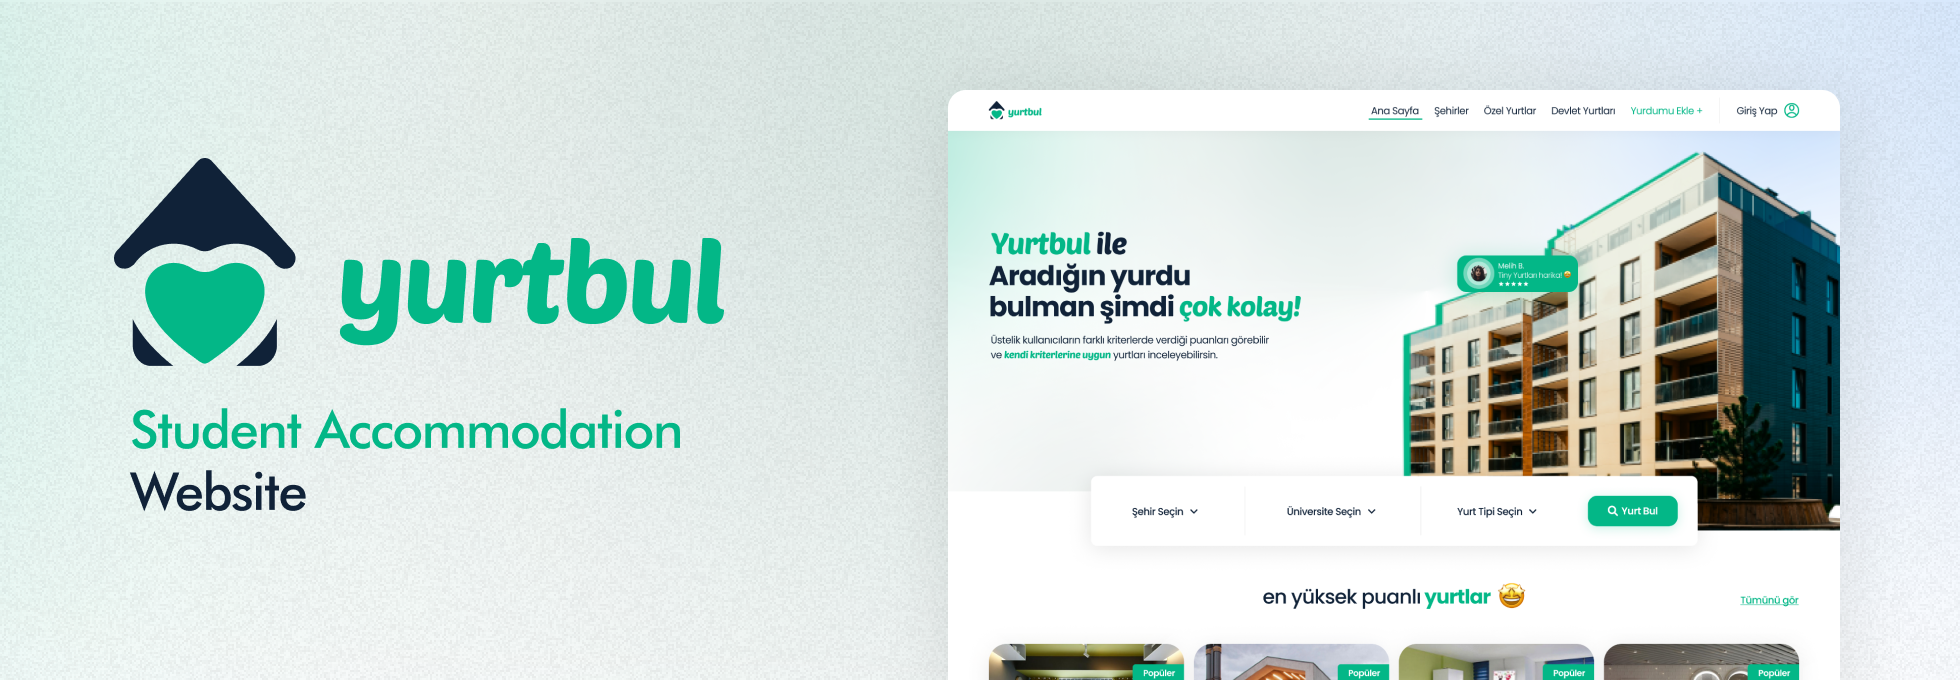 yurtbul.com